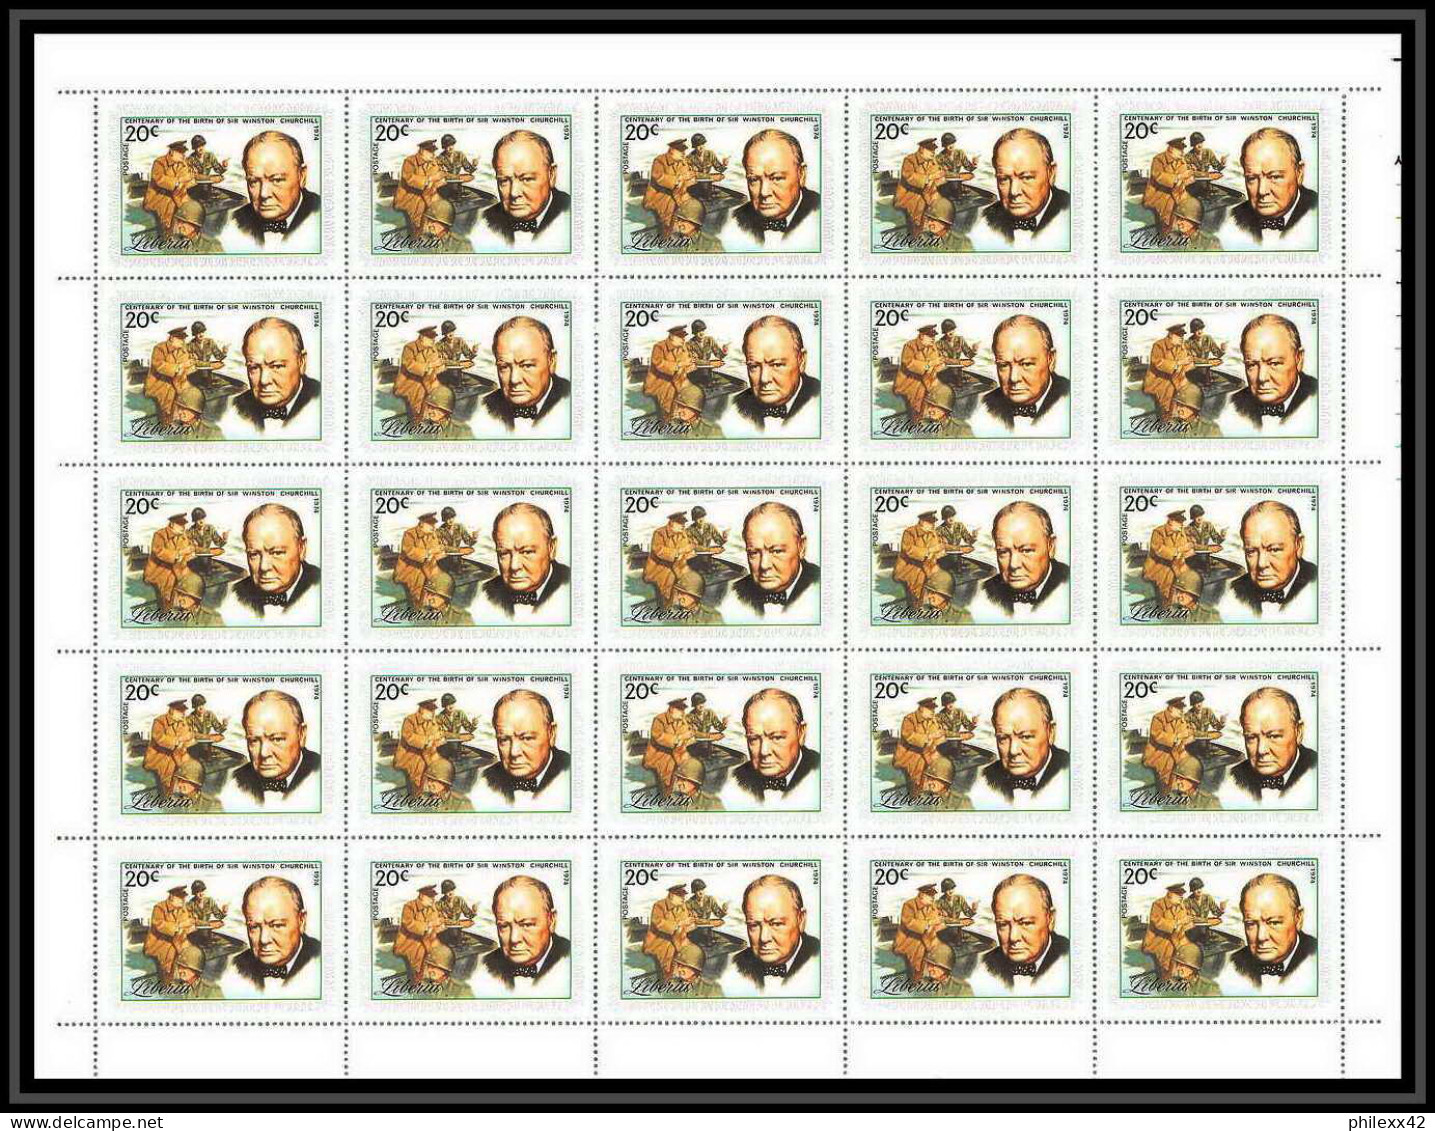 368g - Libéria MNH ** 1974 y&t N° 661 / 666 Sir Winston Churchill feuilles (sheets)